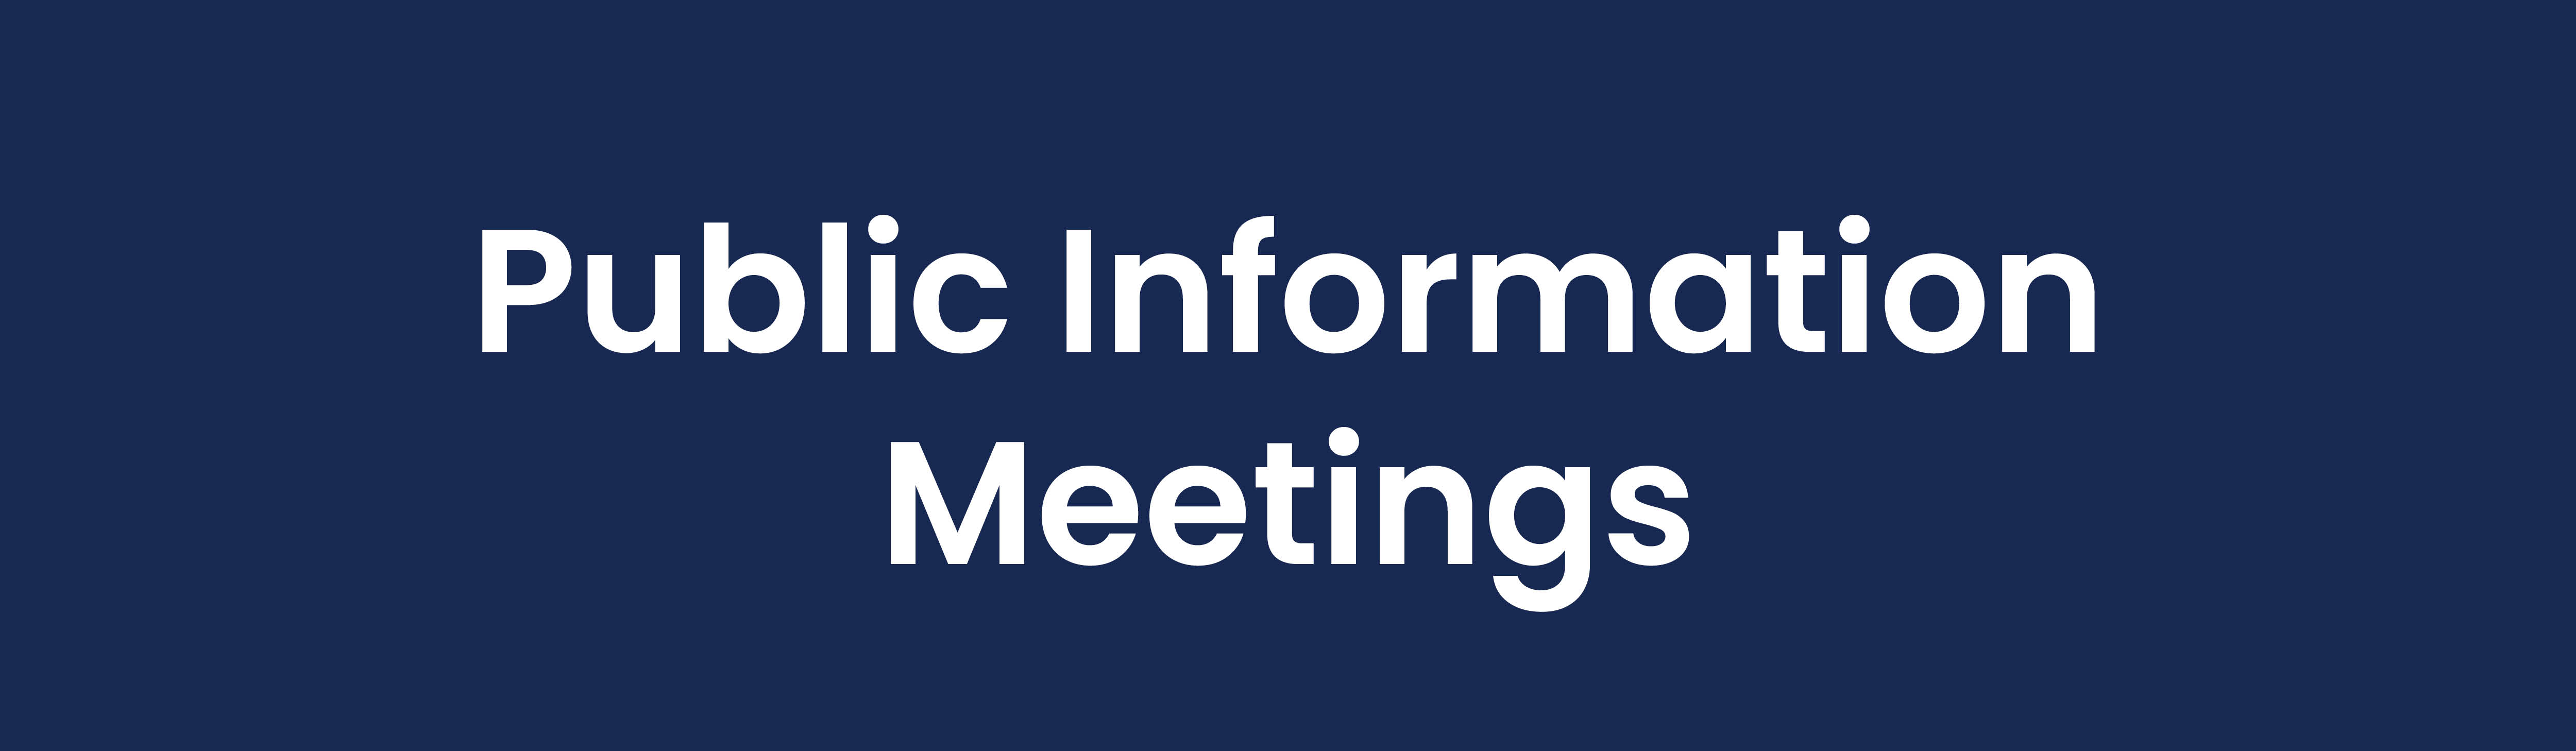 public information meetings button